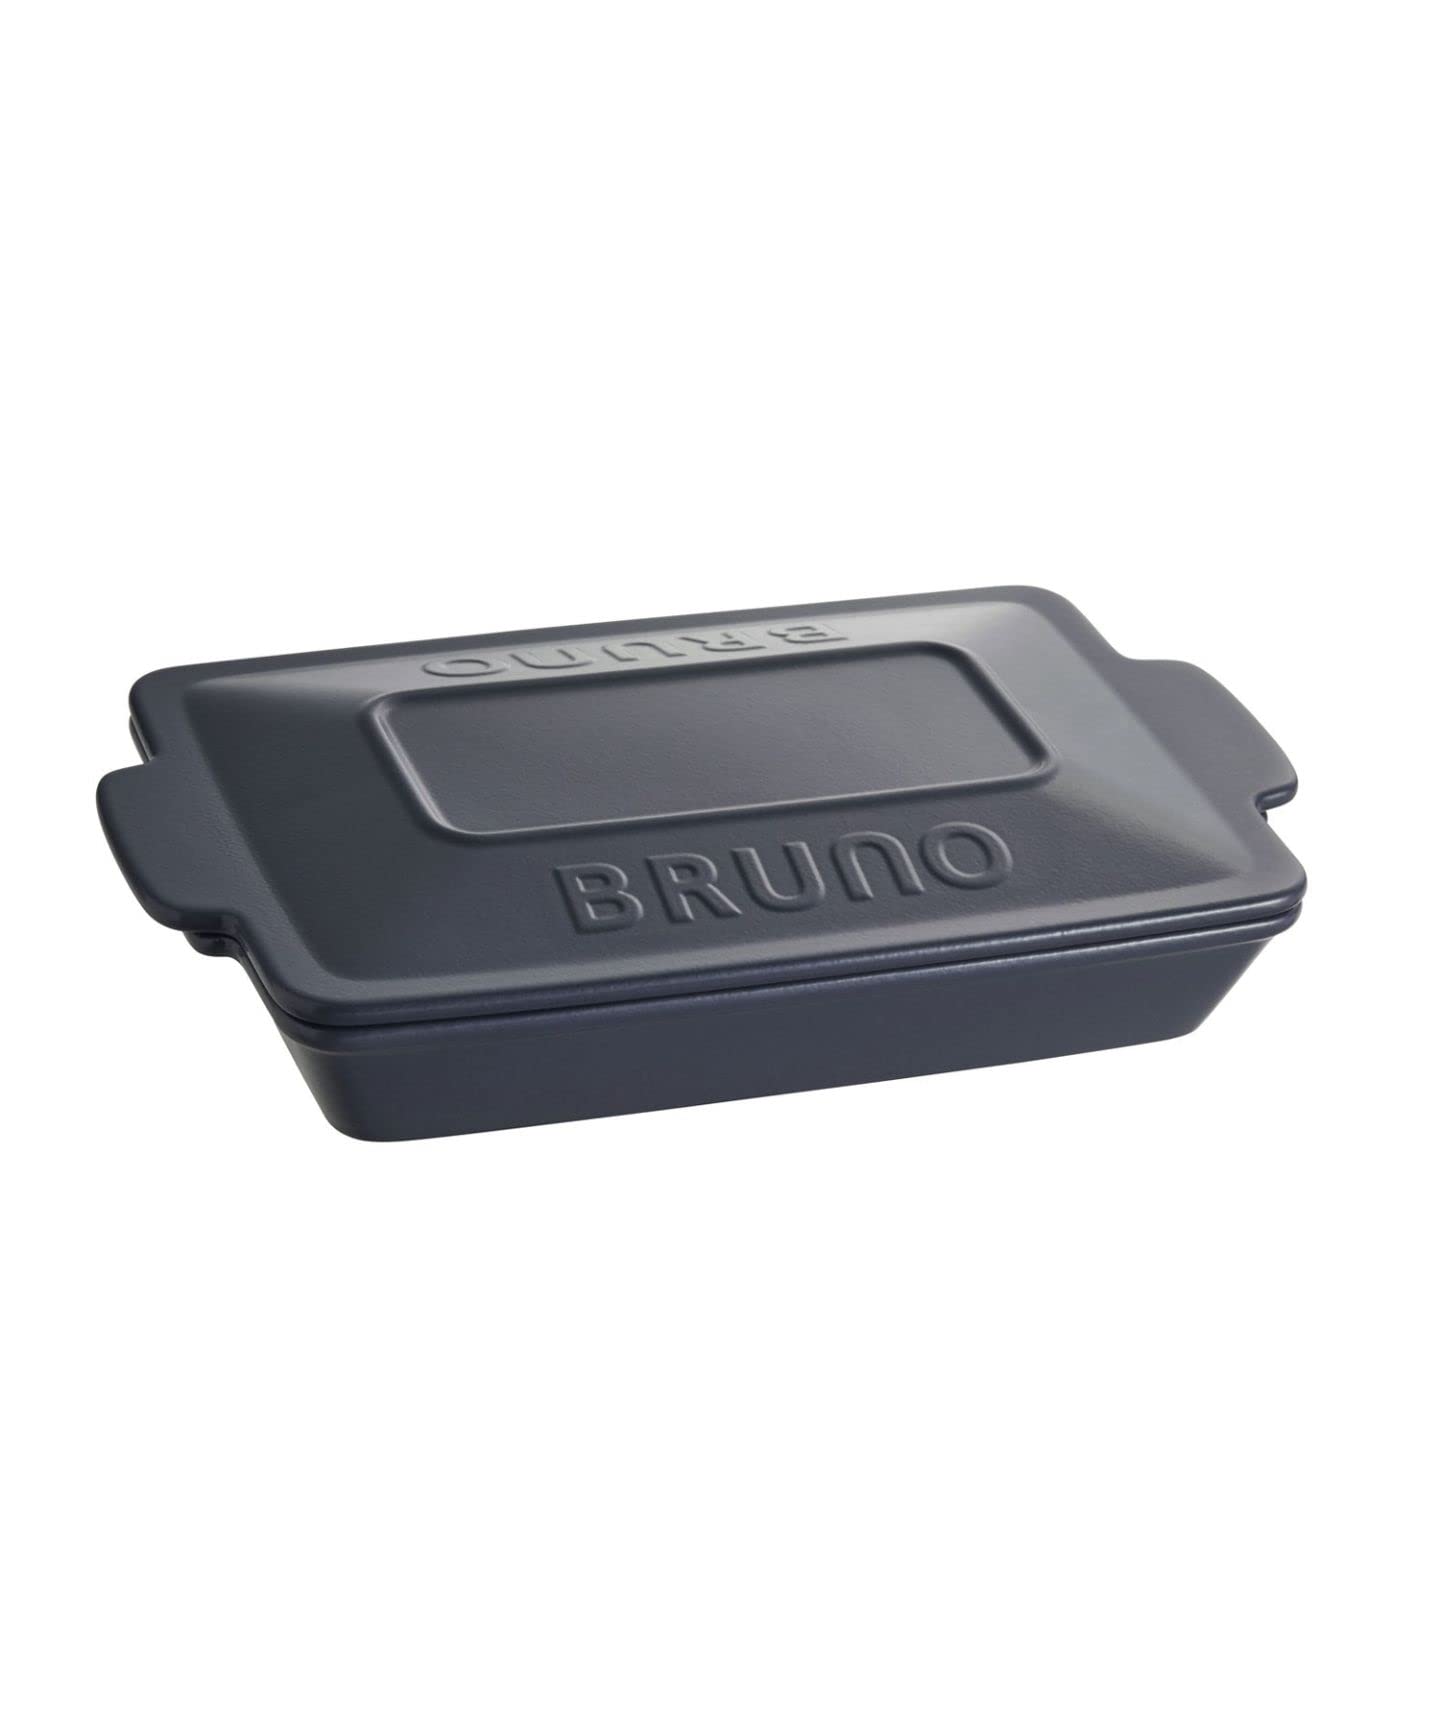 BRUNO ブルーノ セラミックグリルパン ネイビー 蒸し焼き調理 耐熱 野菜料理 魚焼きグリル オーブン トースター 電子レンジ 冷凍 食器洗